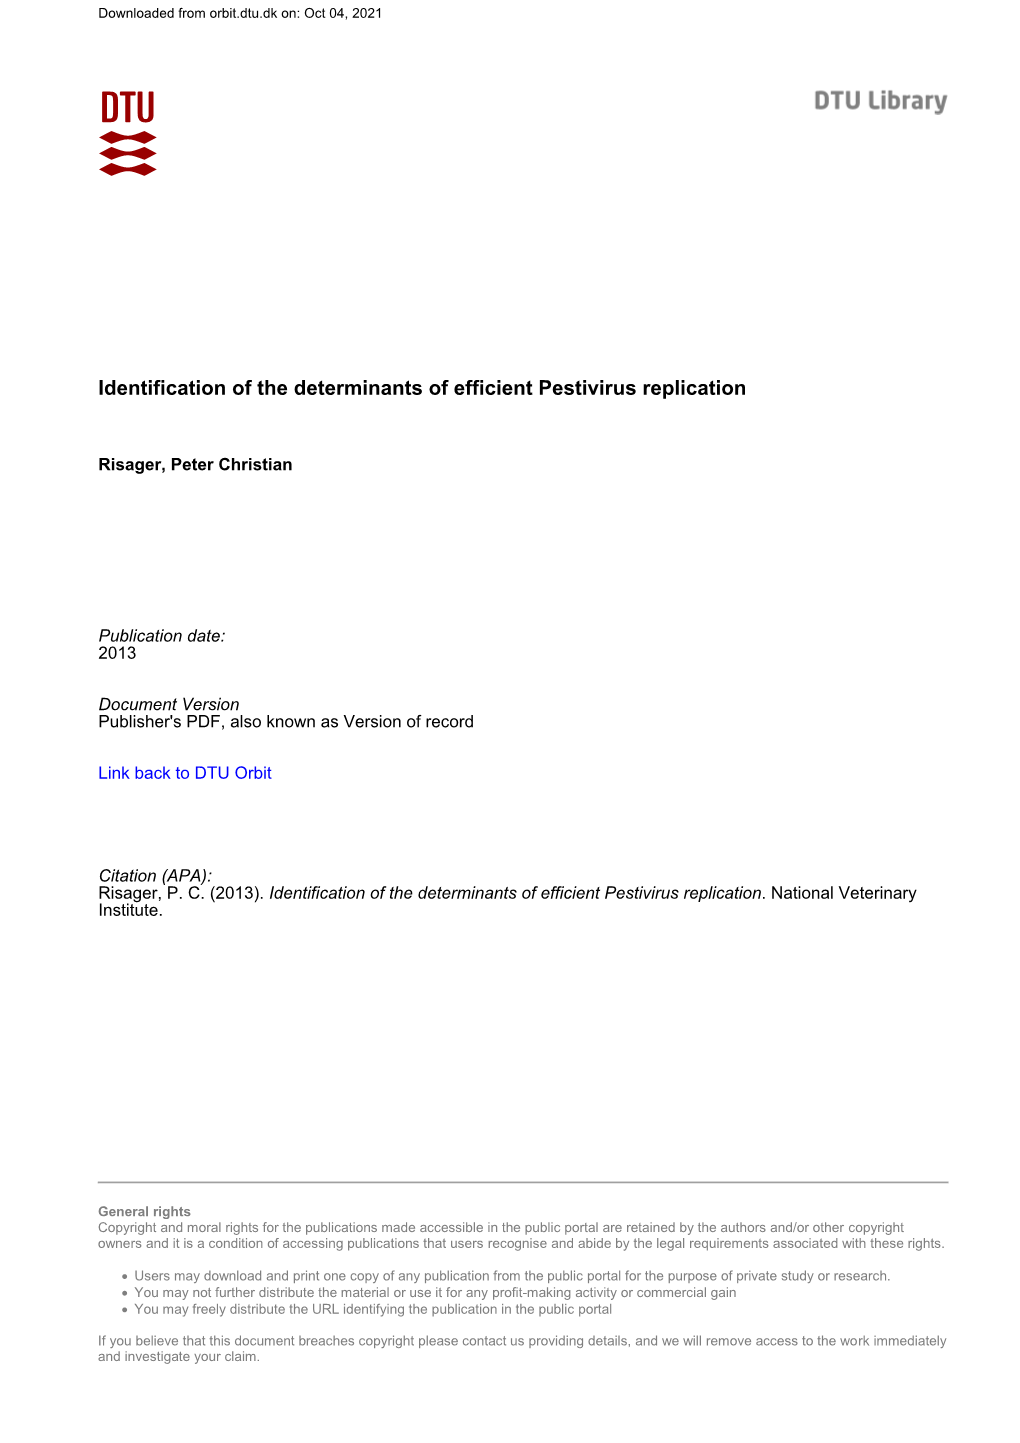 Identification of the Determinants of Efficient Pestivirus Replication